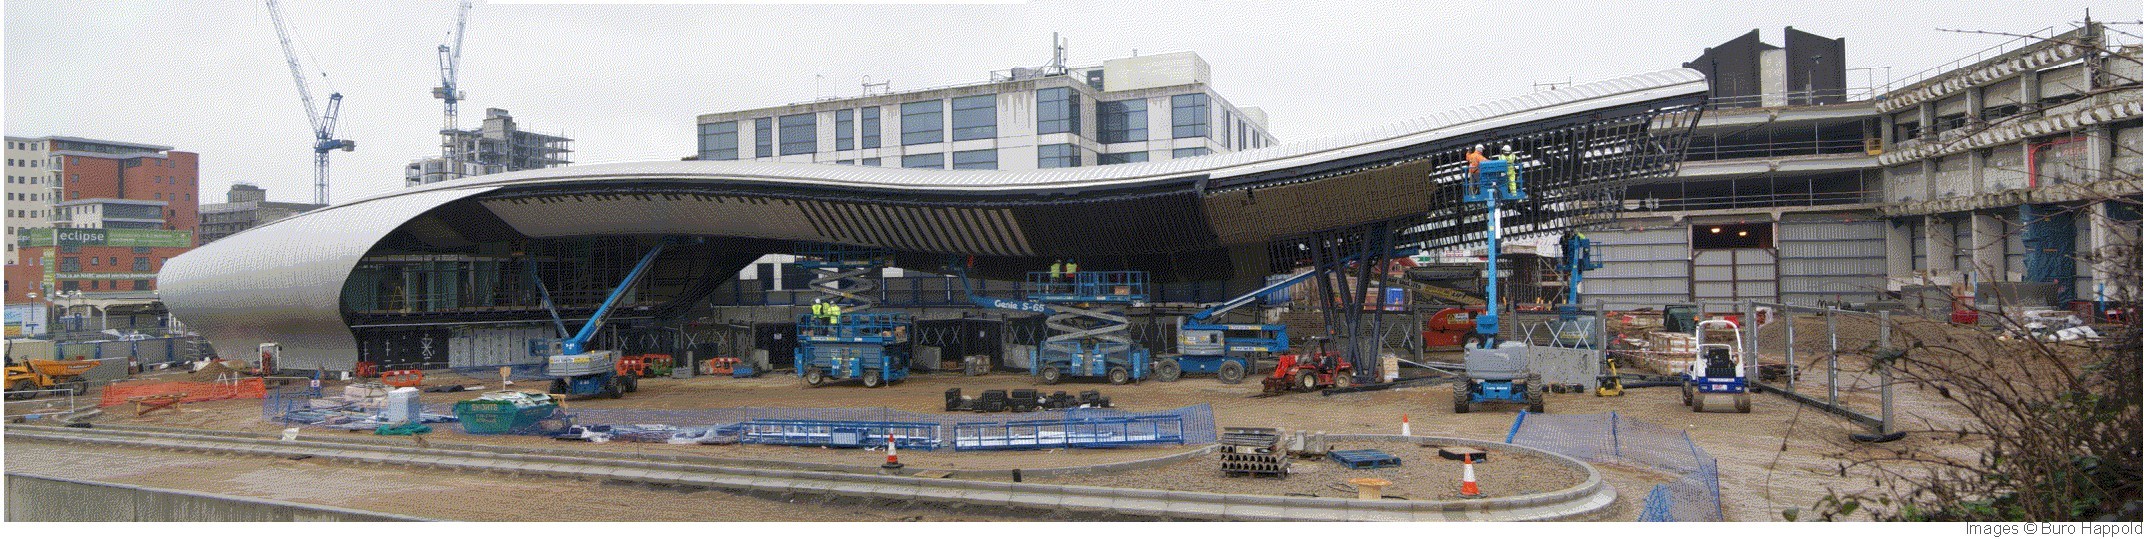 Slough Bus Station construction.jpg